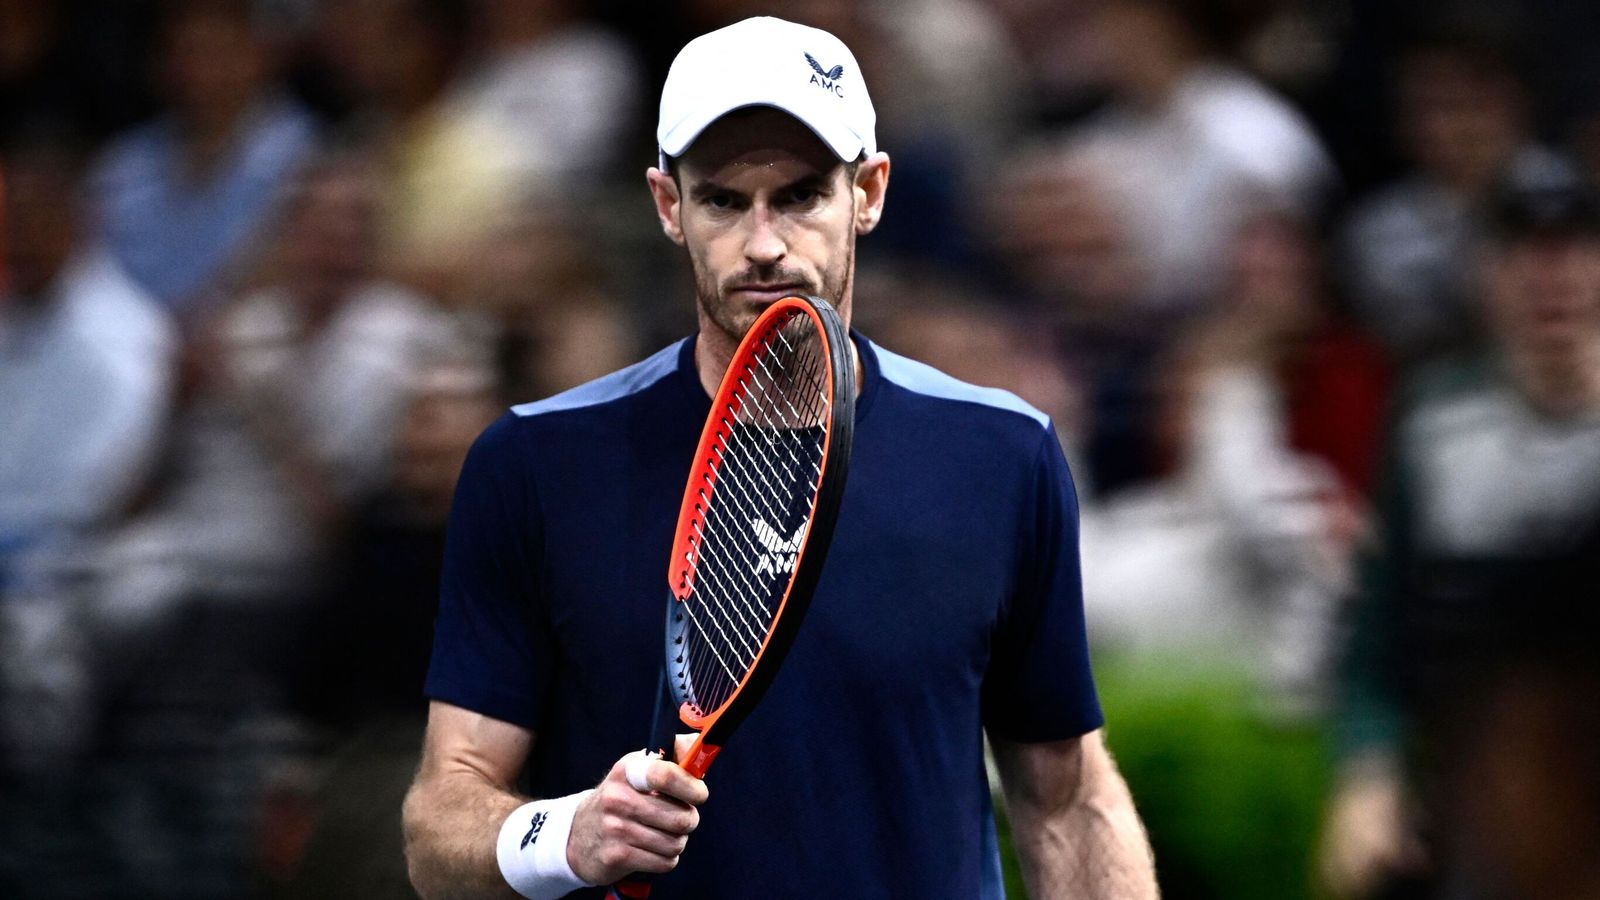 Andy Murray utrpěl krutou třísetovou porážku proti Alex de Minaur na Paris Masters |  Novinky z tenisu